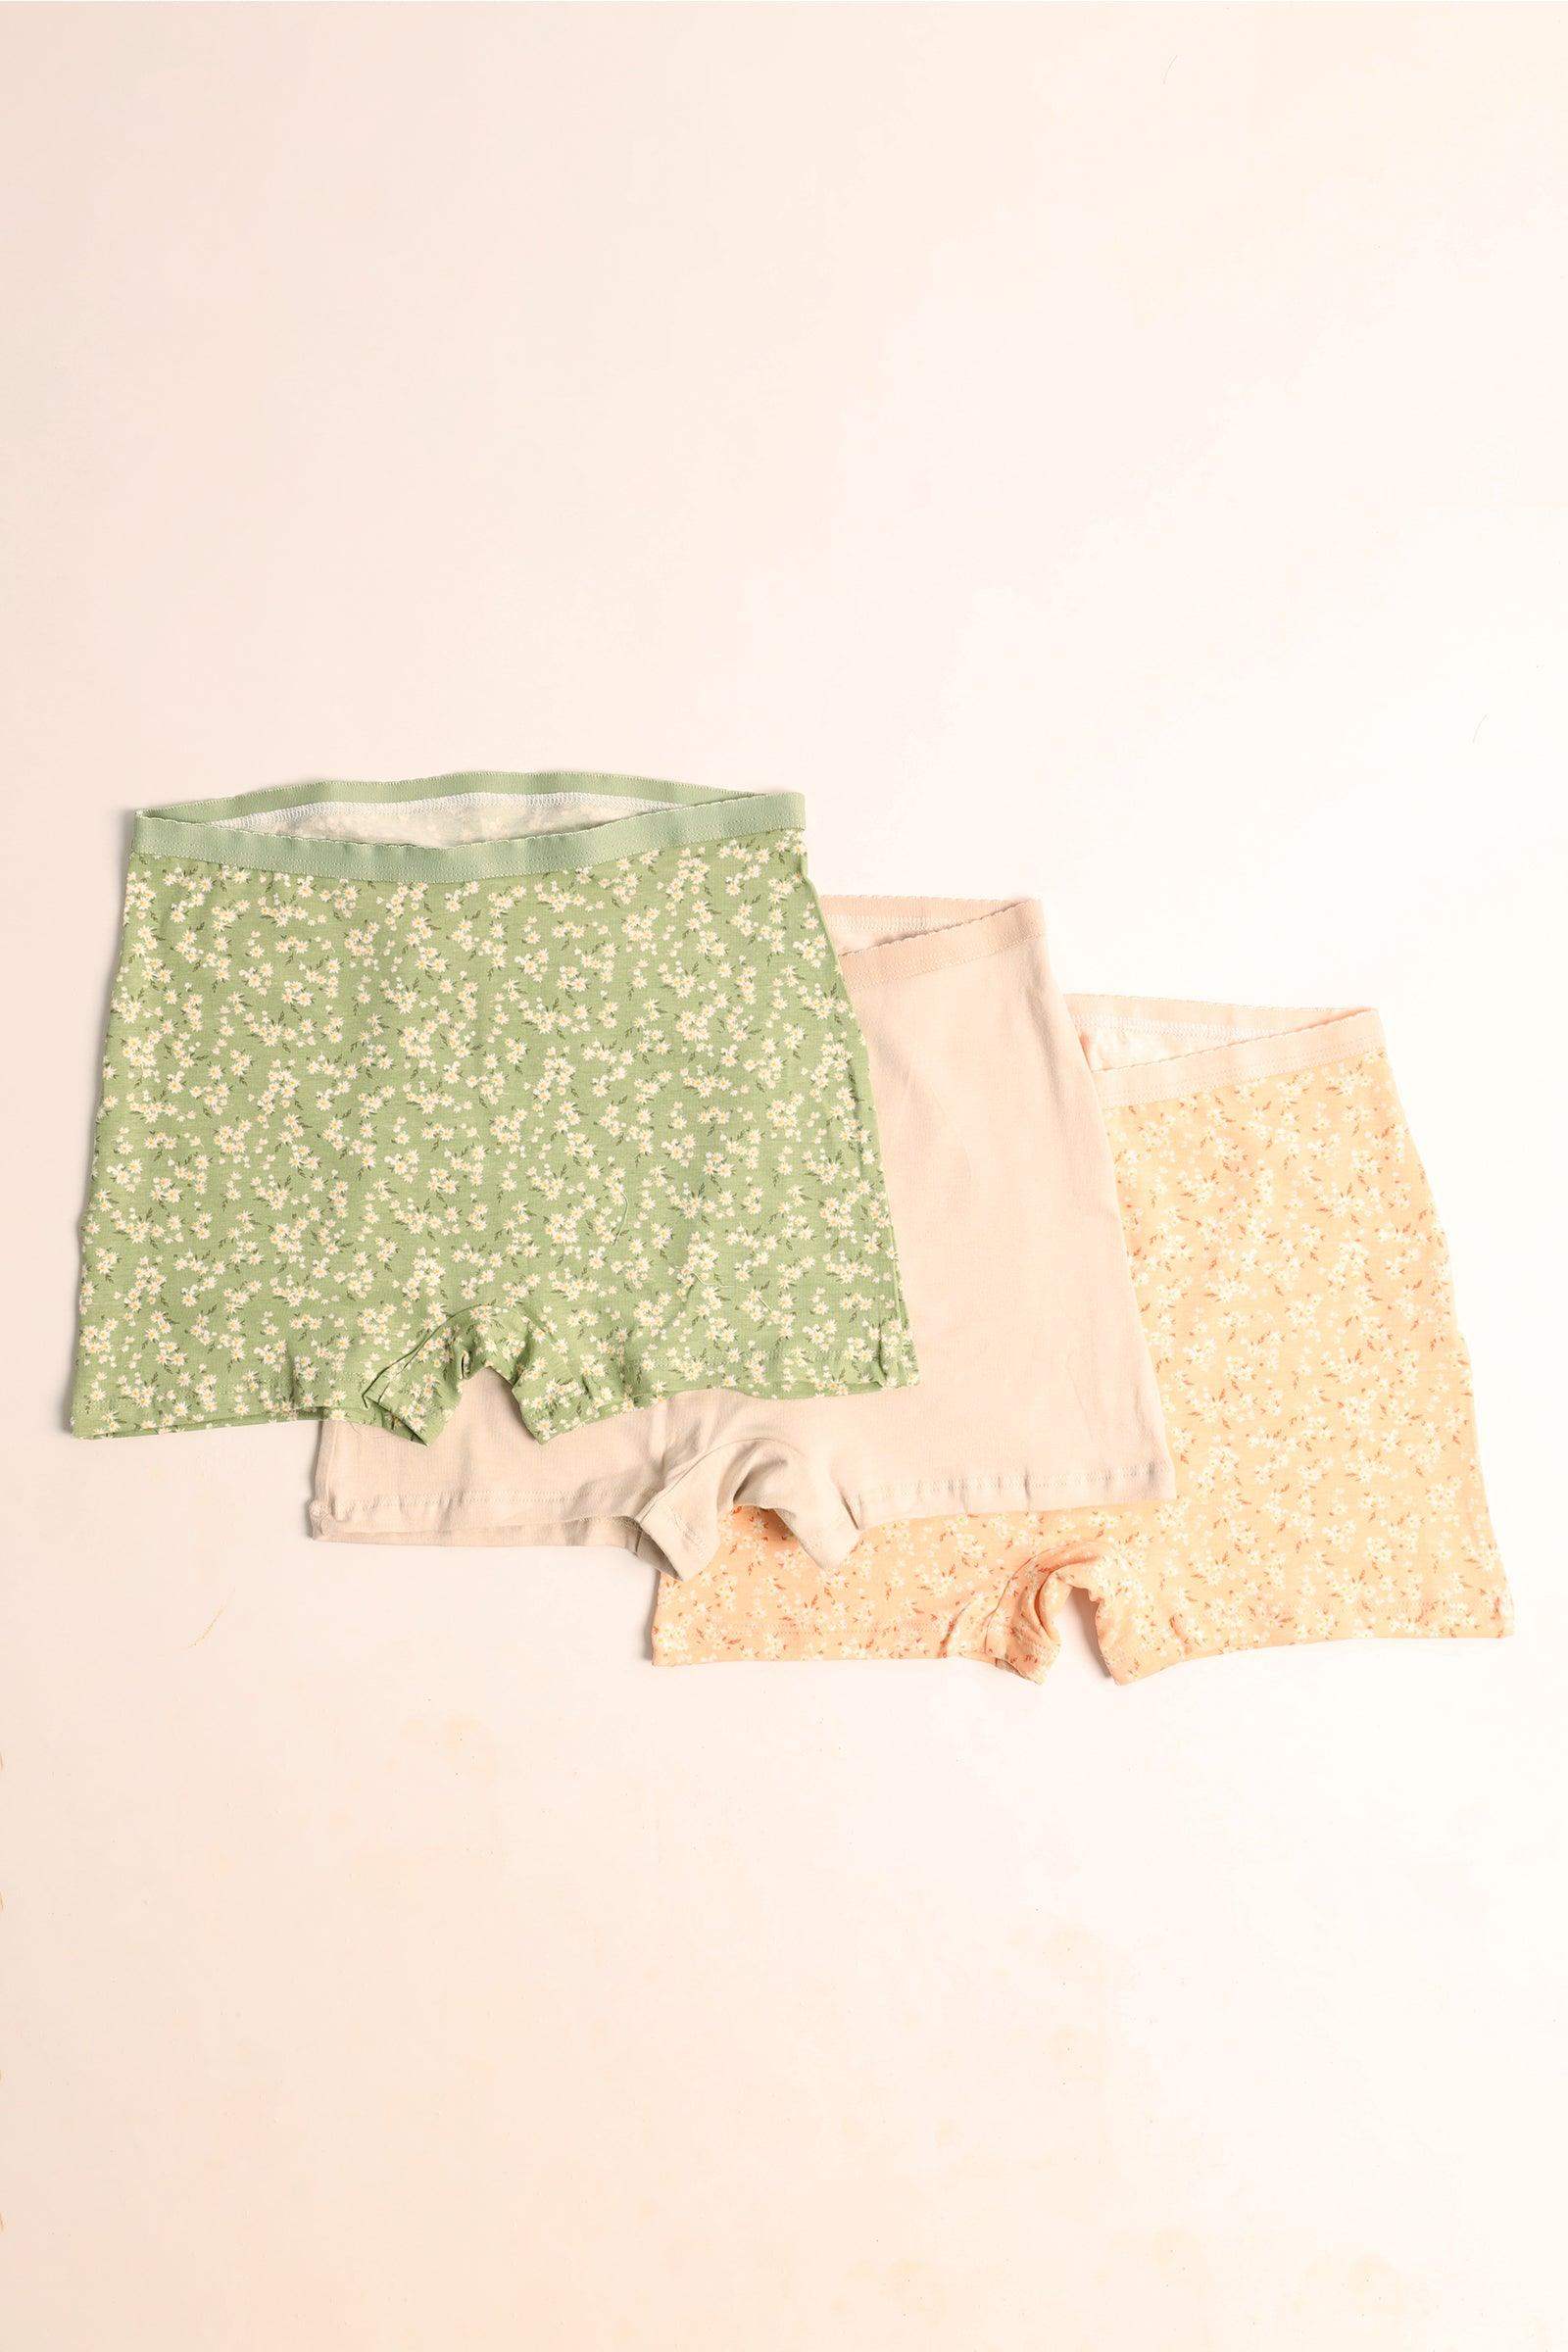 Pack of 3 Colored Short Panties - Carina - كارينا